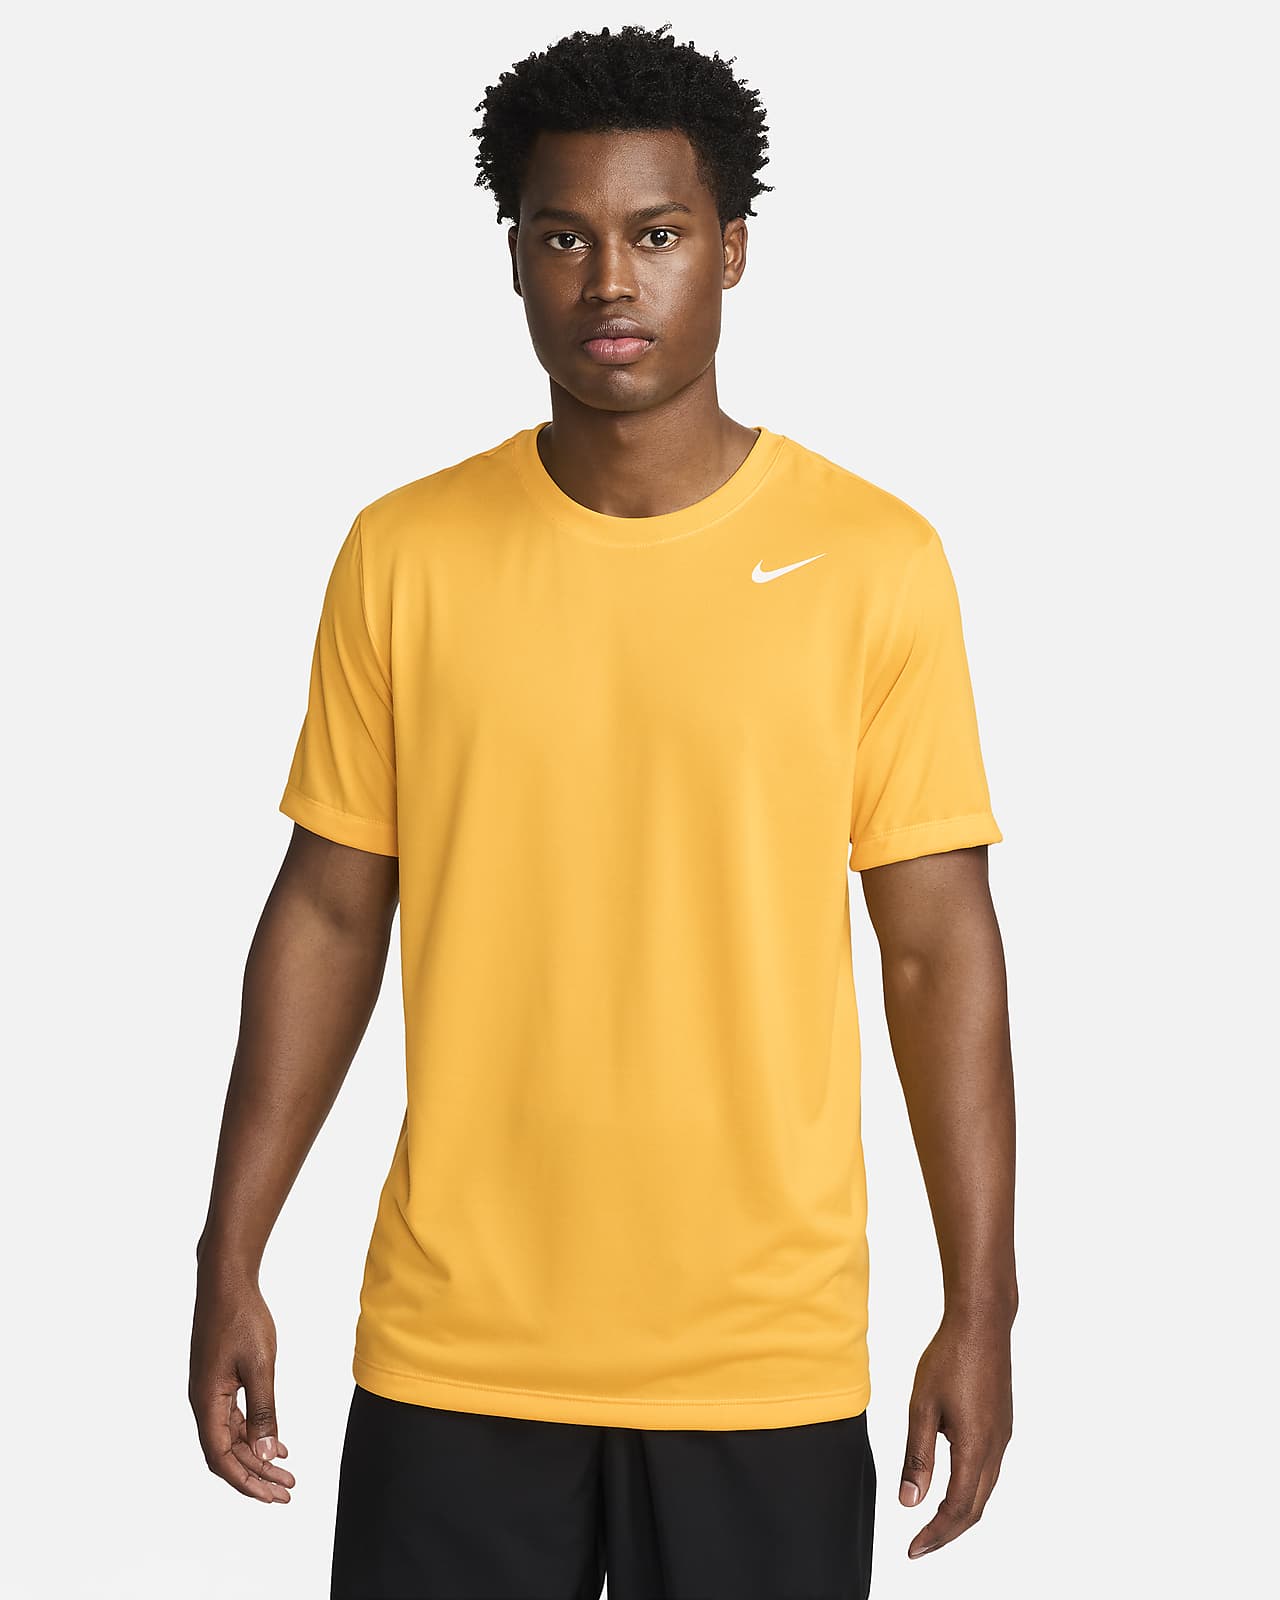 Nike Legend Dri-Fit 2. 0 Men's Sleeveless Tank Top Black Size XL :  : Clothing & Accessories